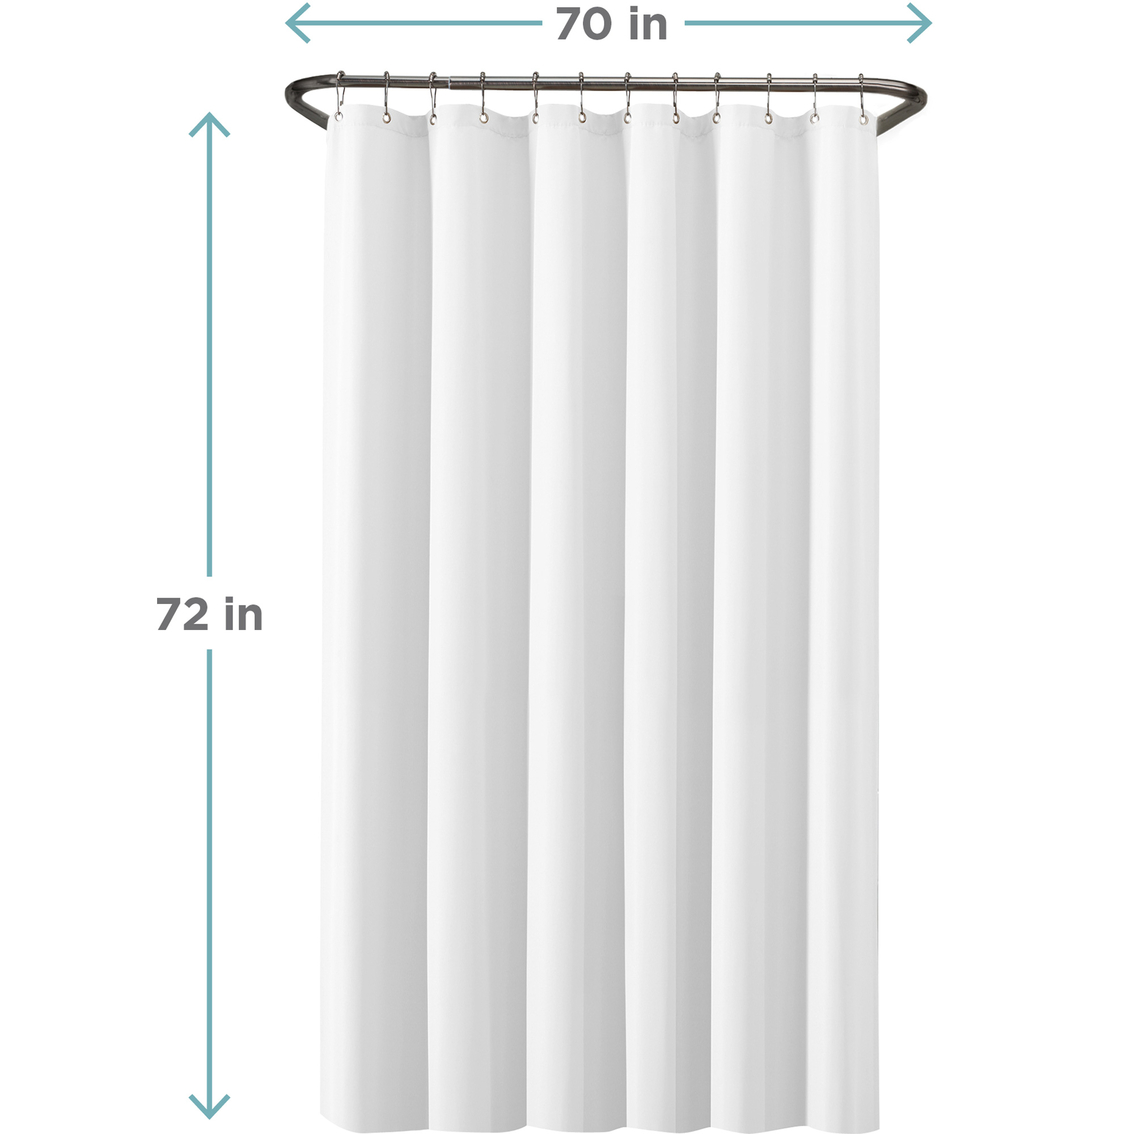 Maytex Ultimate Waterproof Fabric Shower Curtain Liner - Image 2 of 7